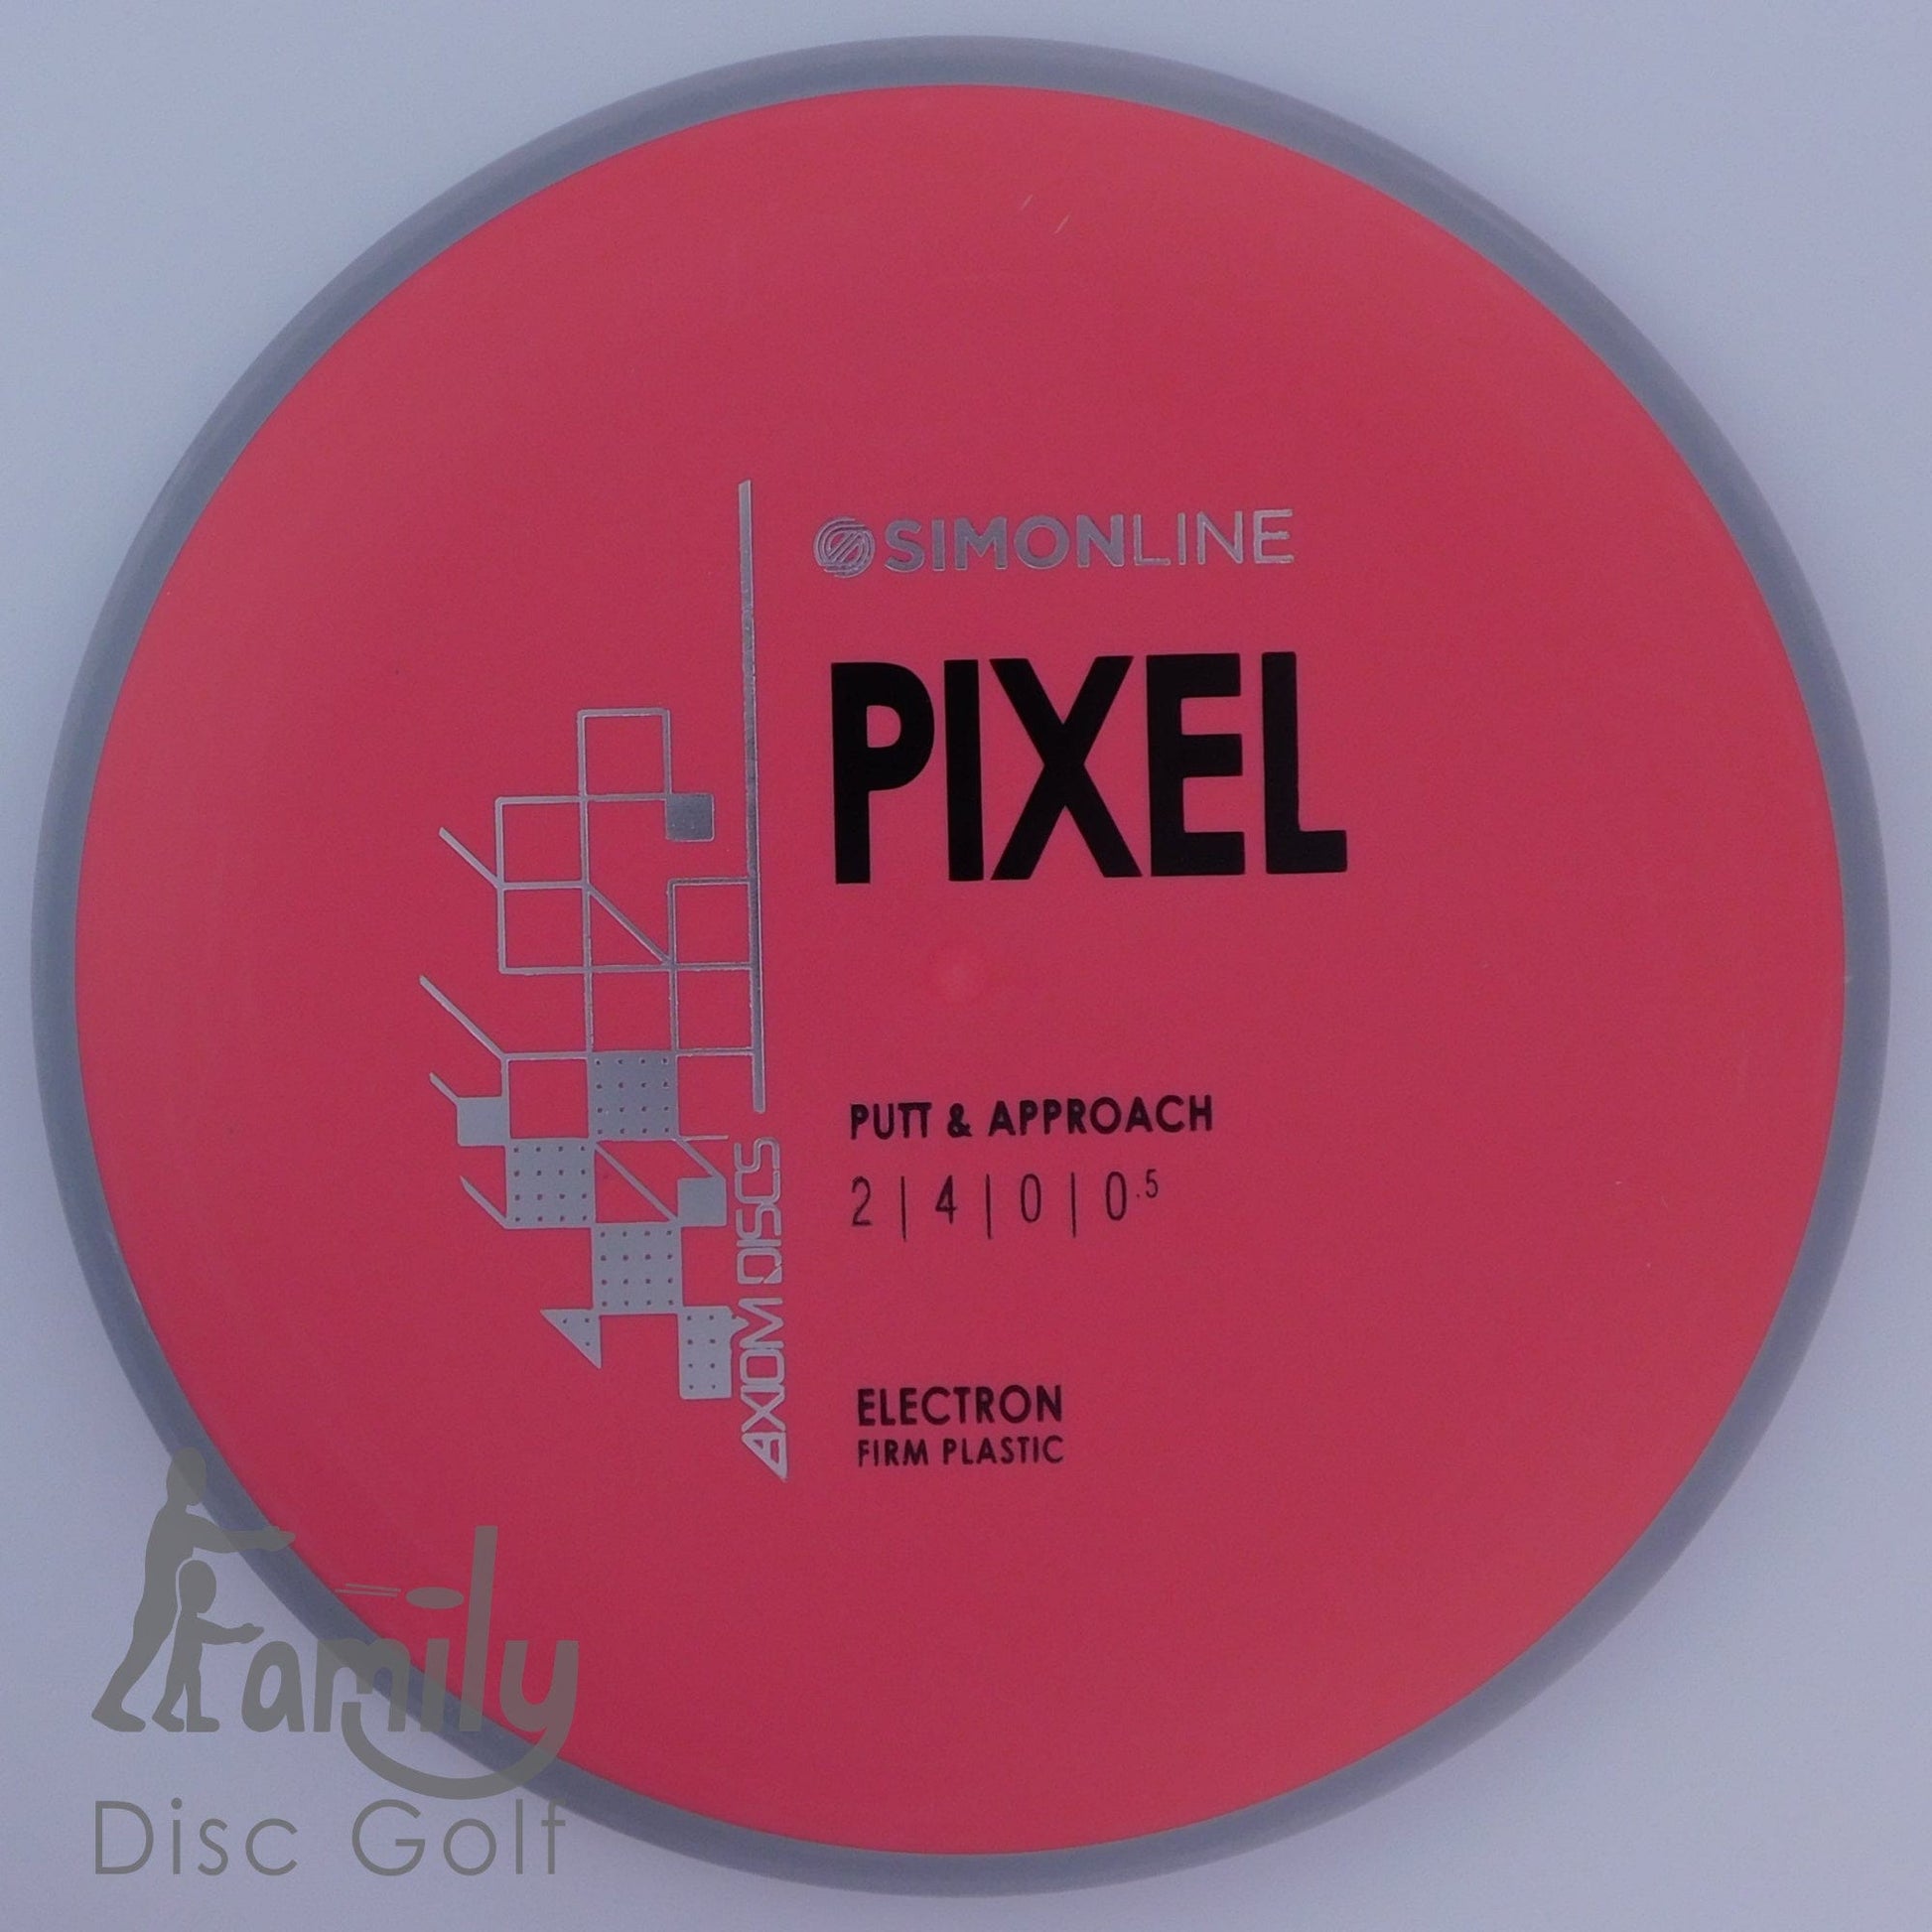 Axiom Pixel - Simon Line - Electron (Firm) 2│4│0│0.5 175g - Red+Grey - Axiom Pixel - Electron Firm - 101891